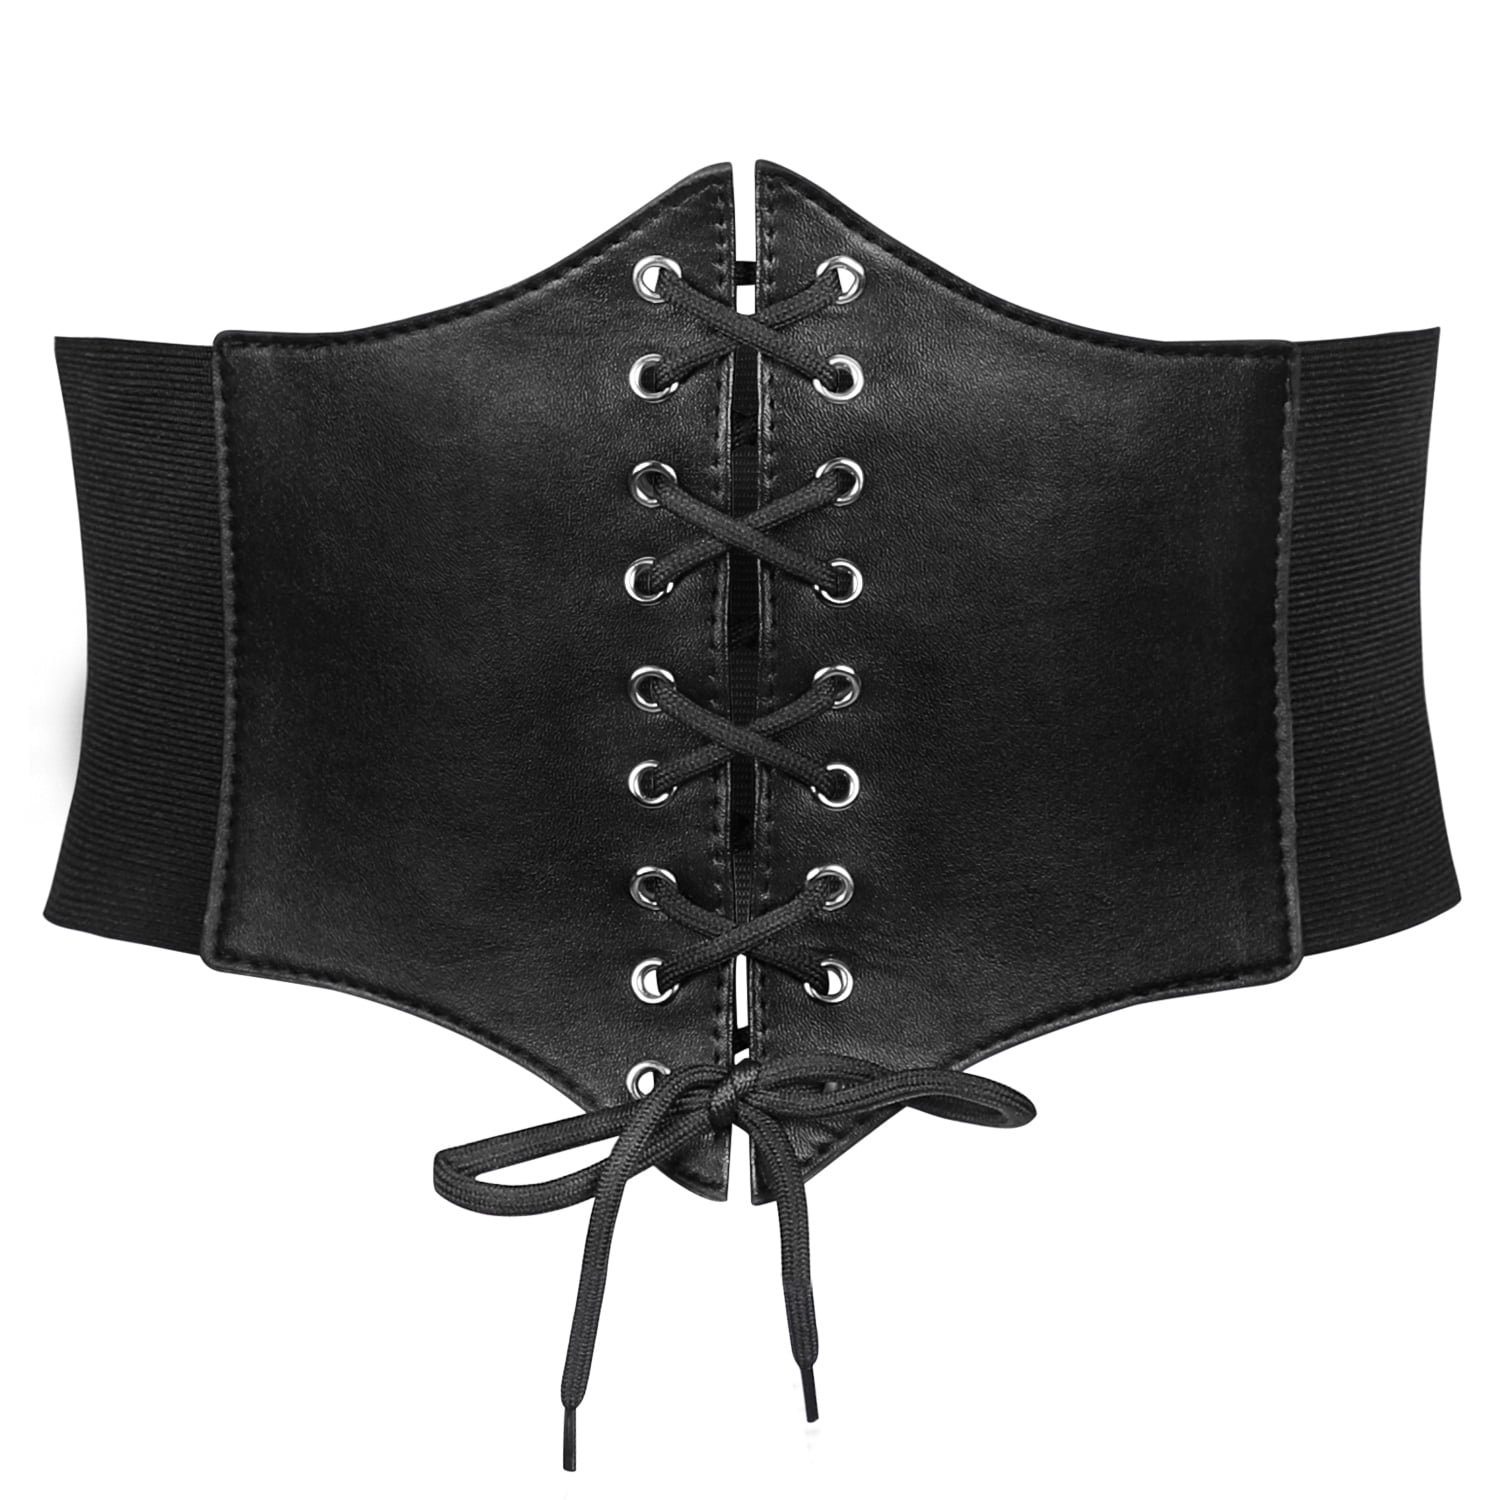 WHIPPY Women Lace-up Corset Waist Belt, Elastic Black Wide Belt For Dress 